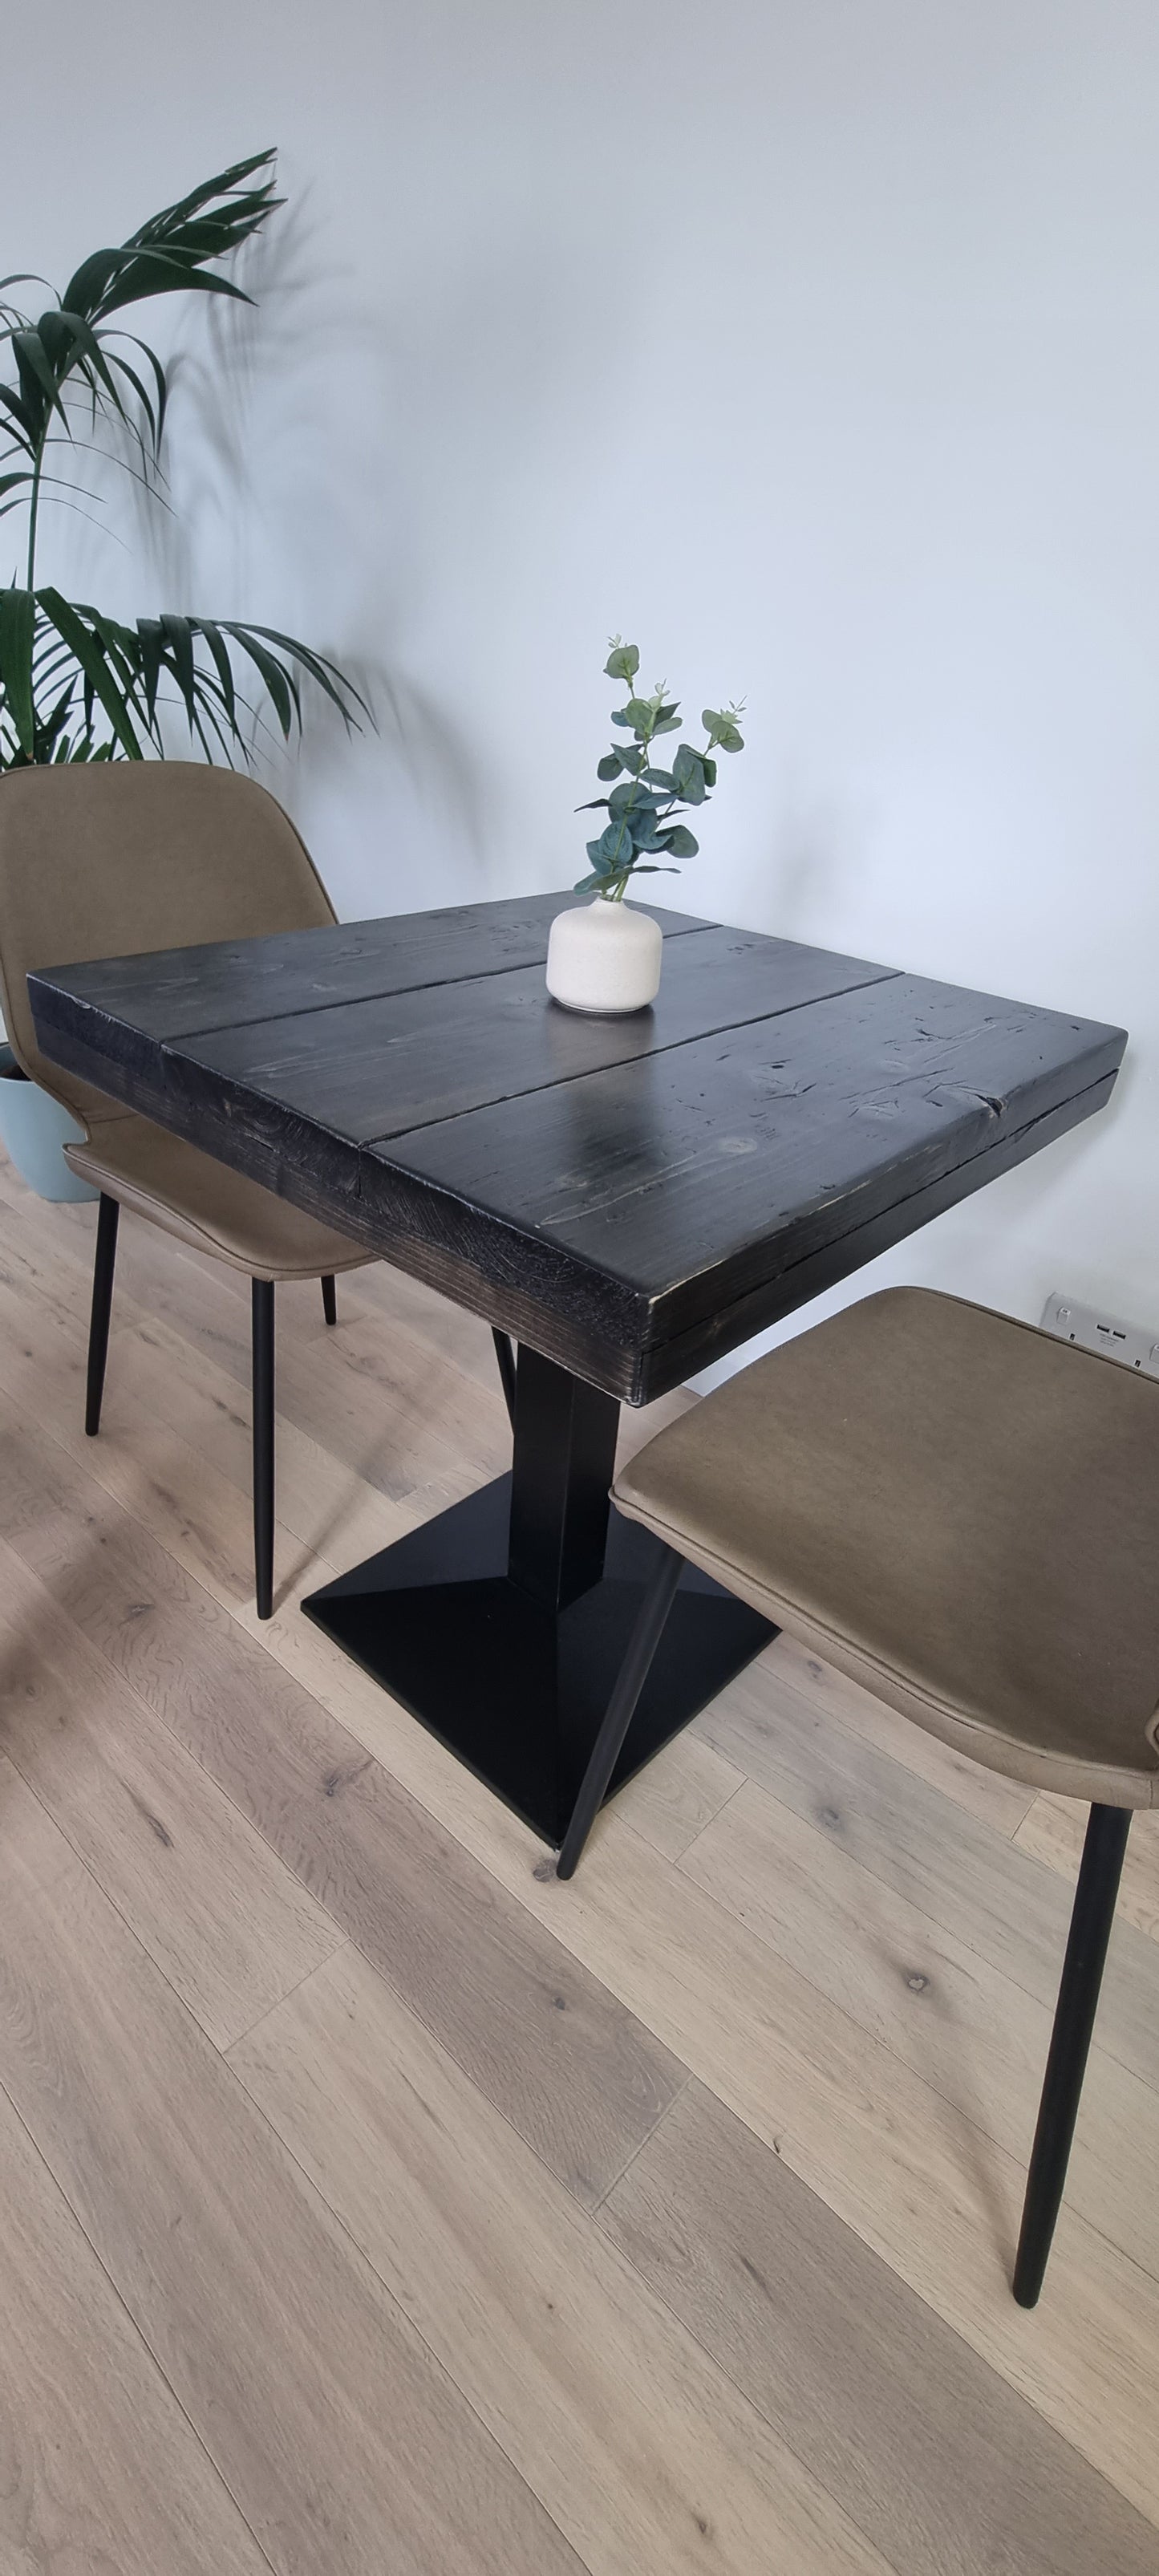 Bistro square table with cast iron pedestal leg